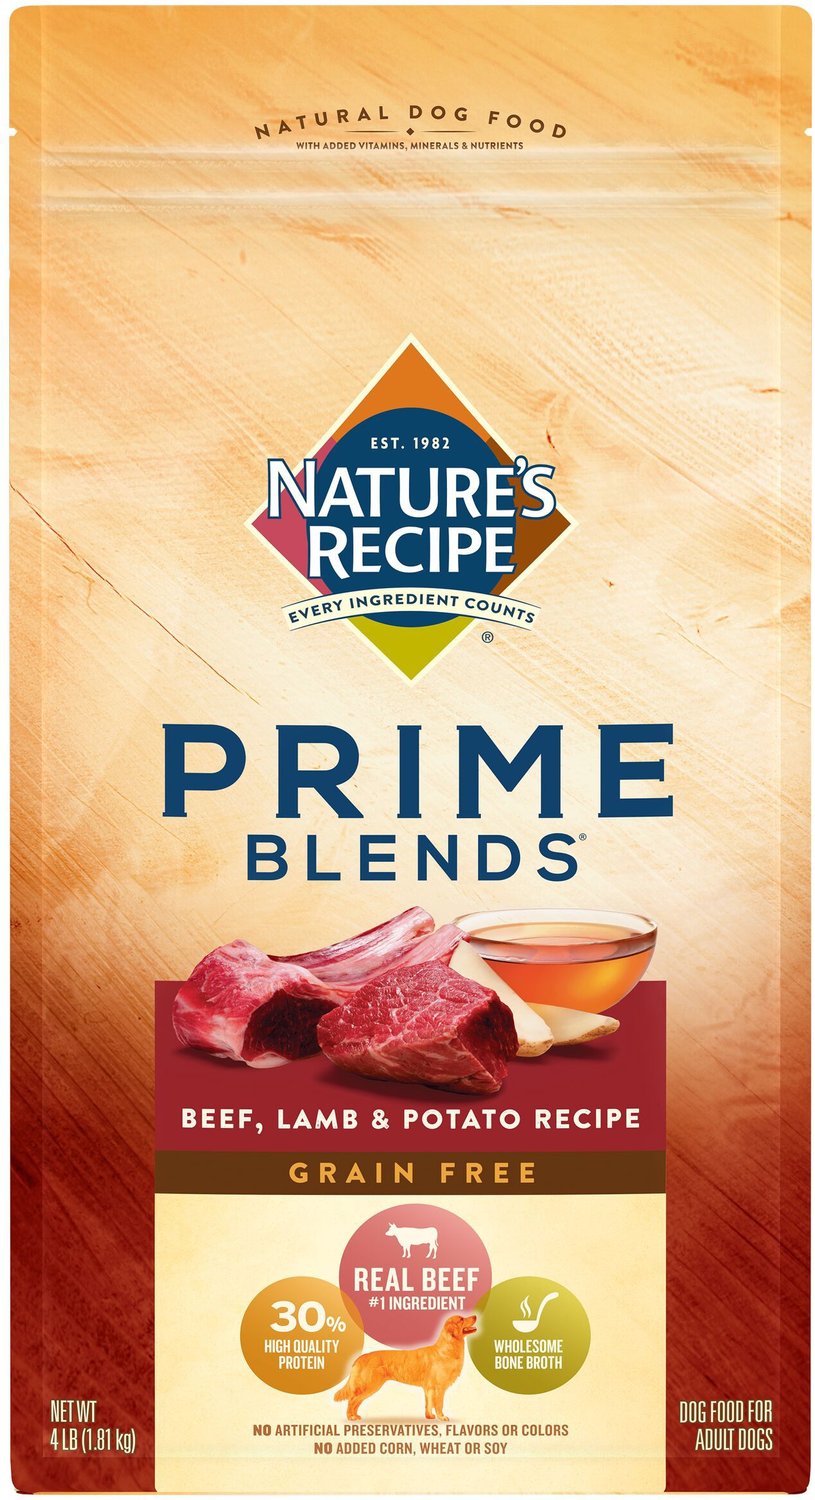 Nature's Recipe Prime Blends Beef, Lamb, and Potato Recipe GrainFree